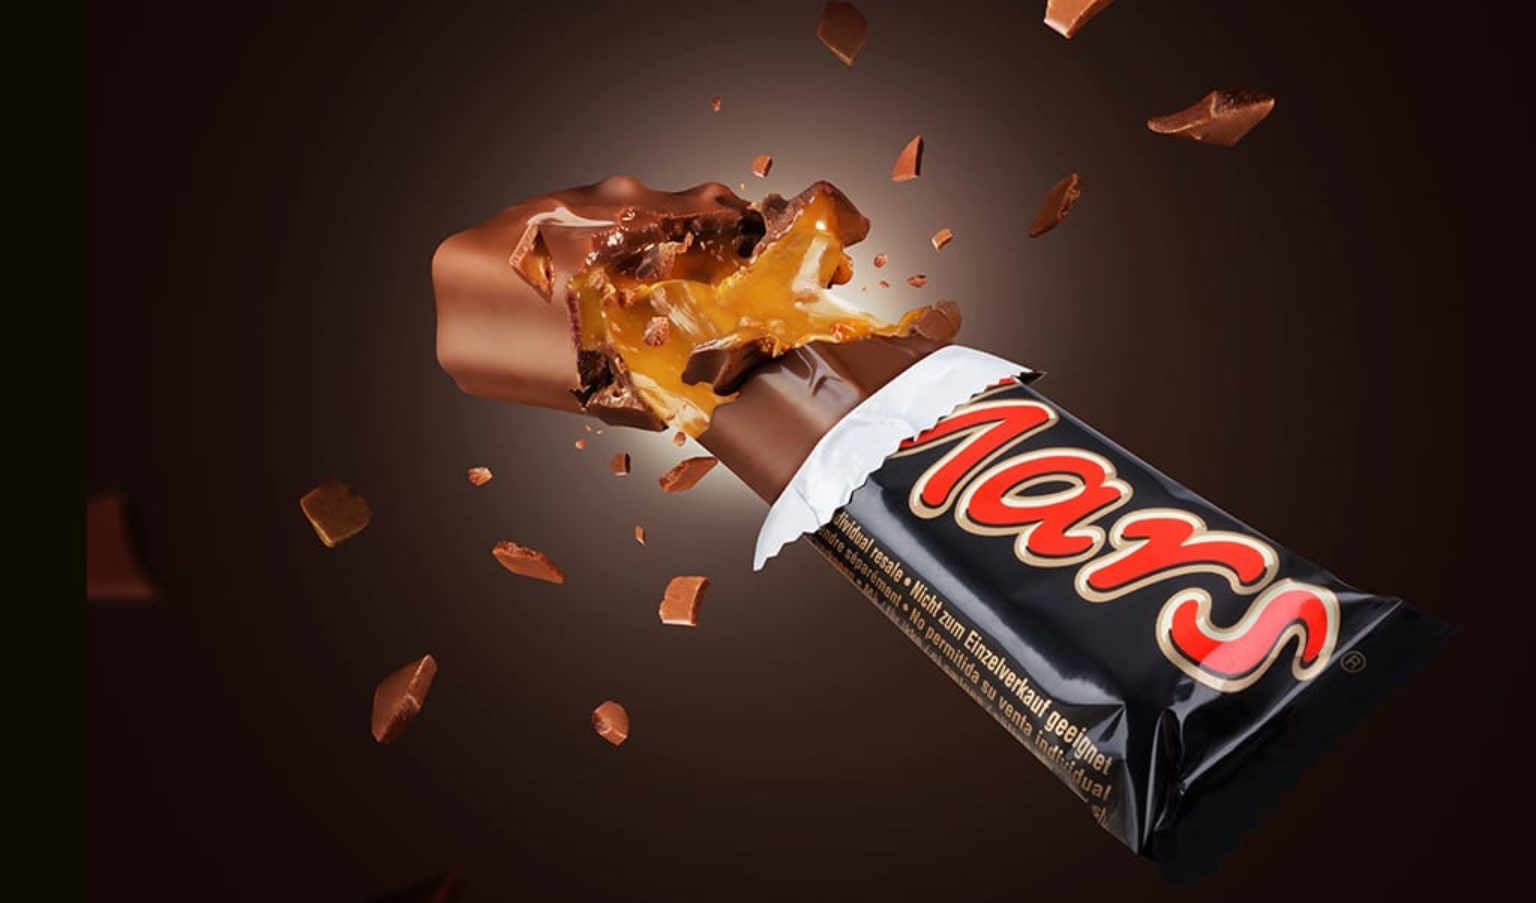 Barre chocolat Mars éclatée